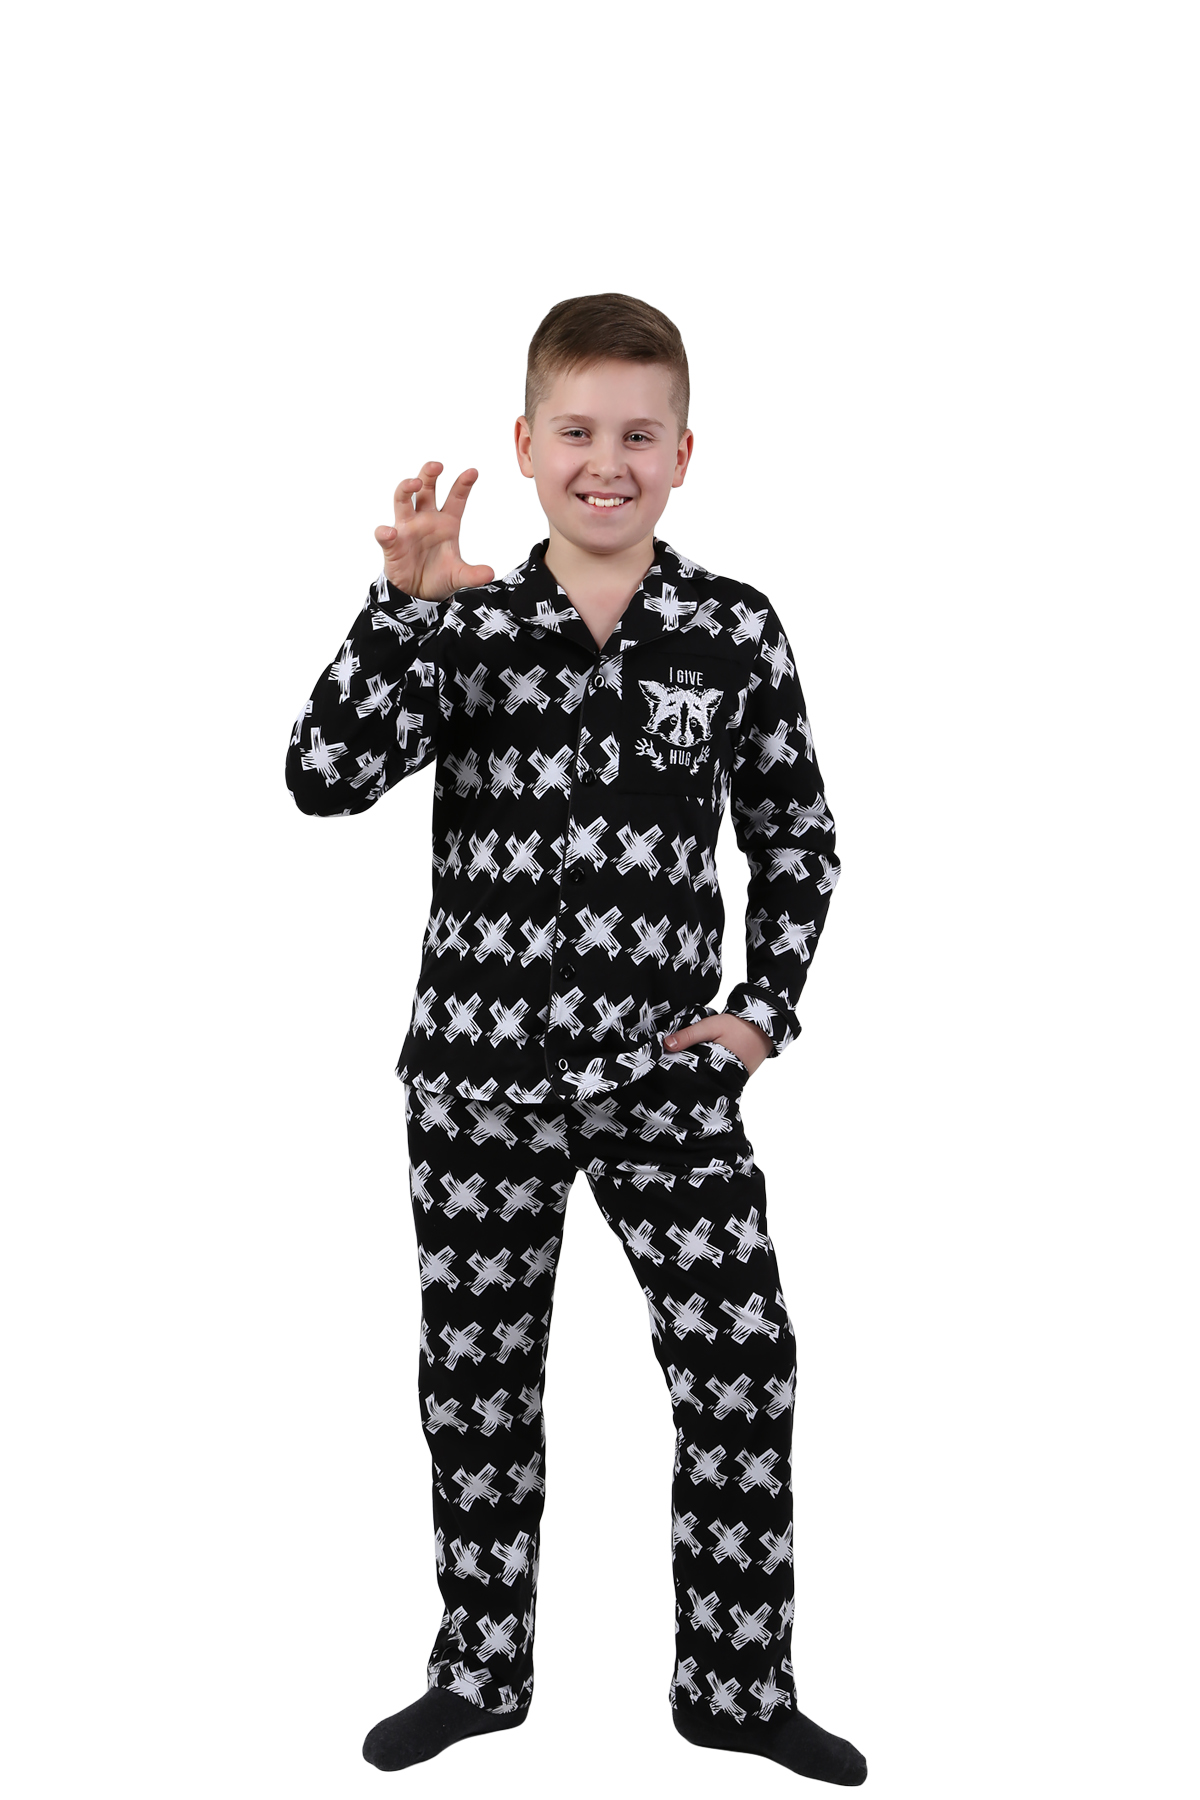 Детская пижама Енотик Цвет: Черный (10 лет), размер 10 лет otj636450 Детская пижама Енотик Цвет: Черный (10 лет) - фото 1